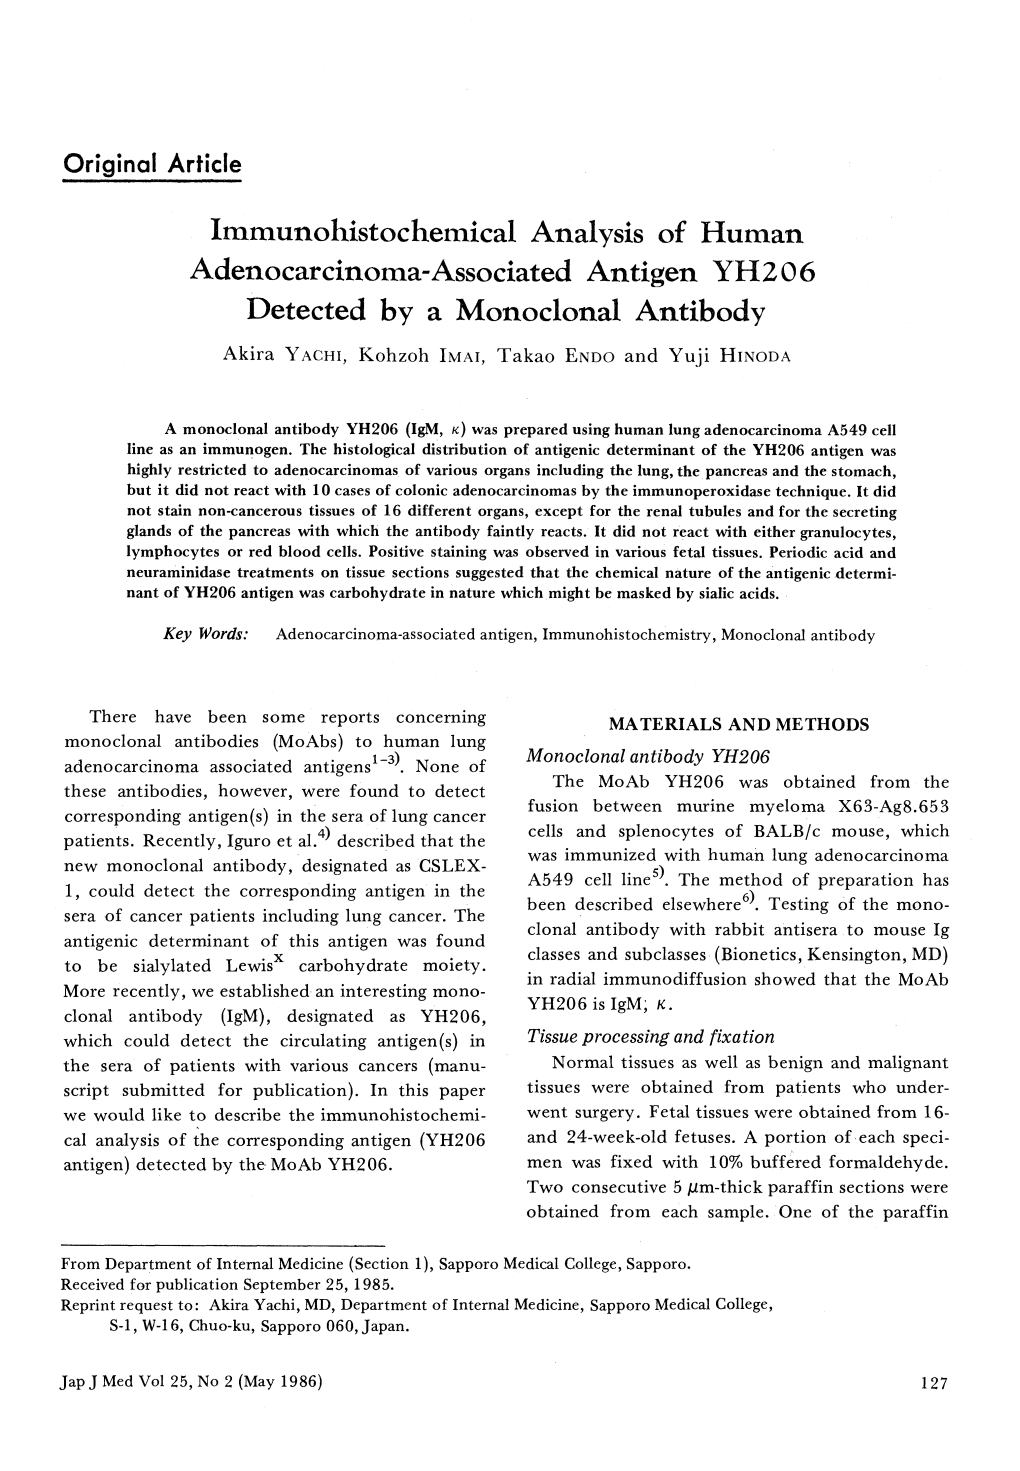 Immunohistochemical Analysis of Human Adenocarcinoma-Associated Antigen YH20 6 Detected by a Monoclonal Antibody Akira Yachi, Kohzoh Imai, Takao Endo and Yuji Hinoda